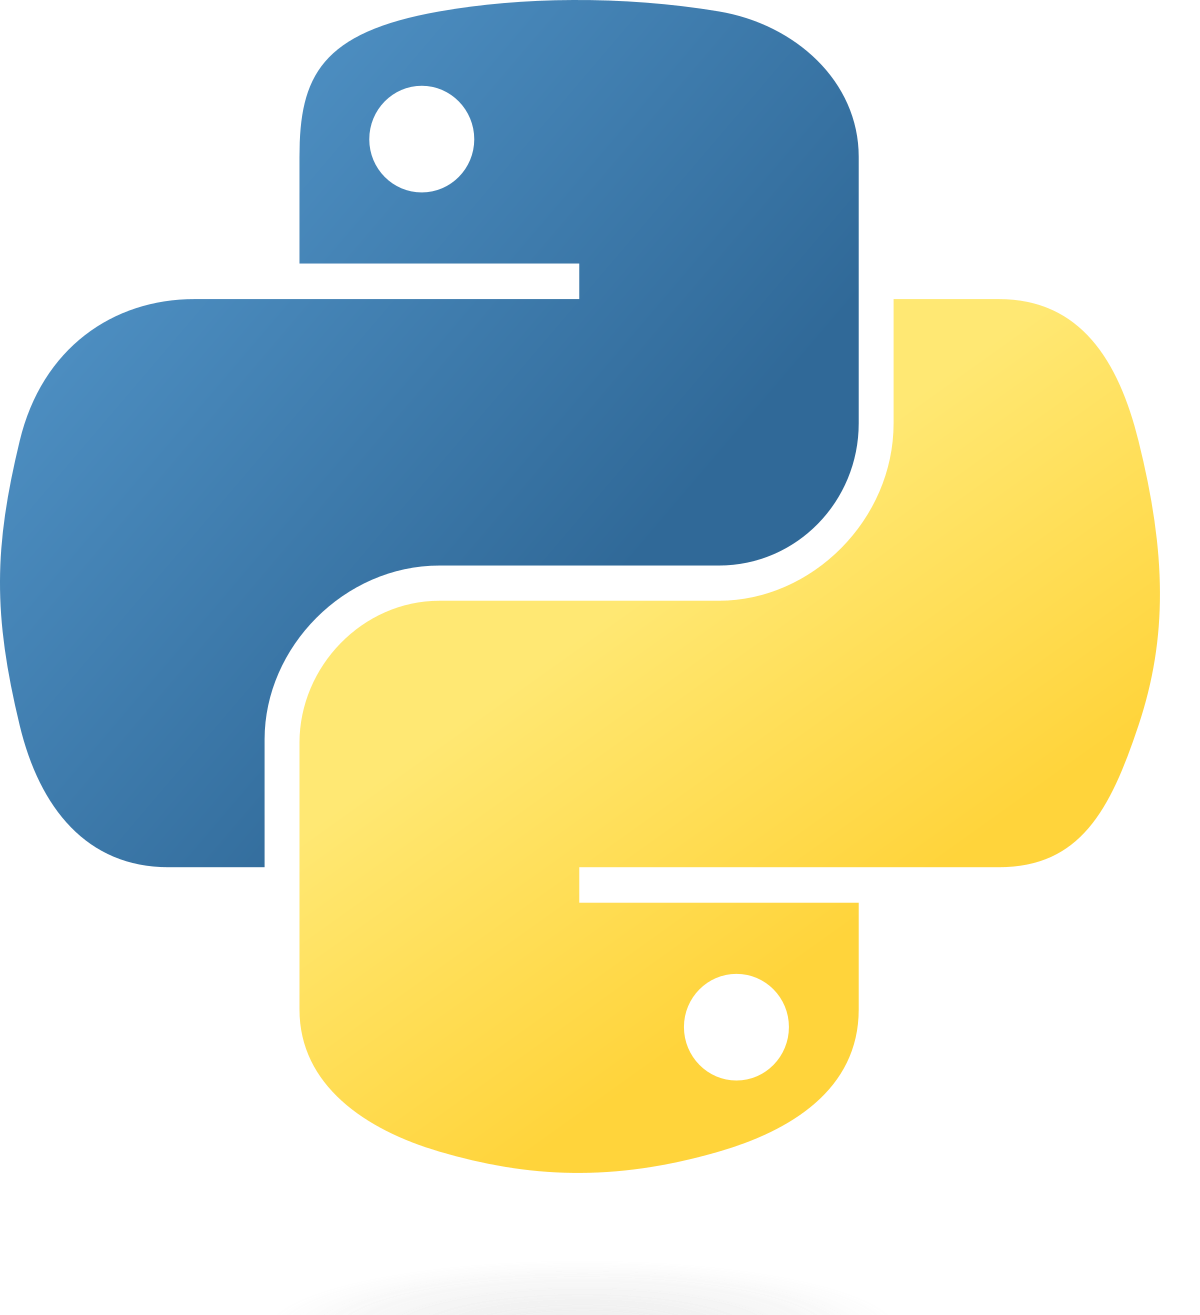 Python Development Company - Sifars